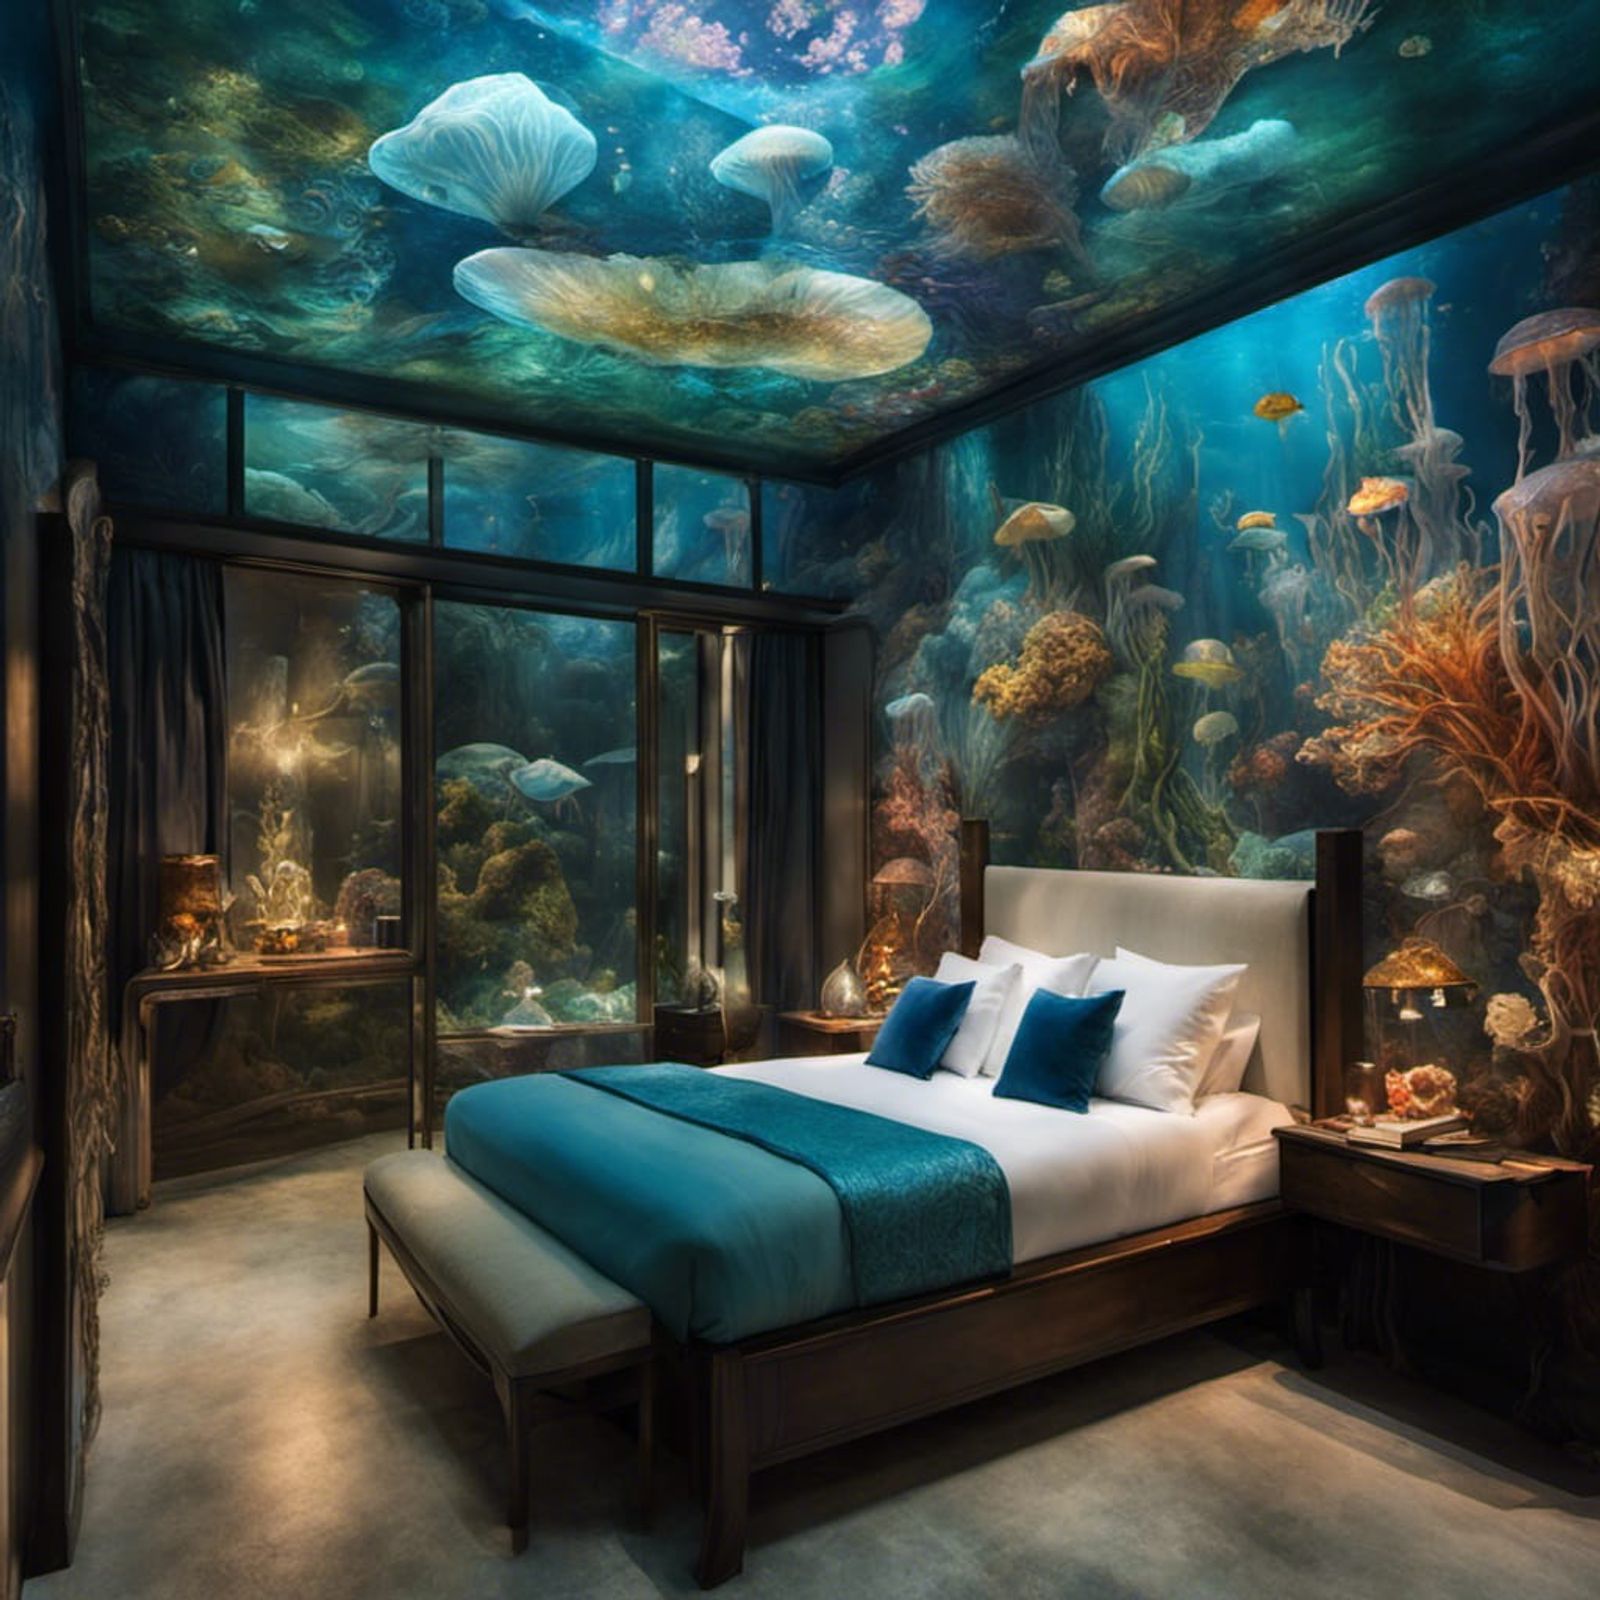 underwater bedroom theme